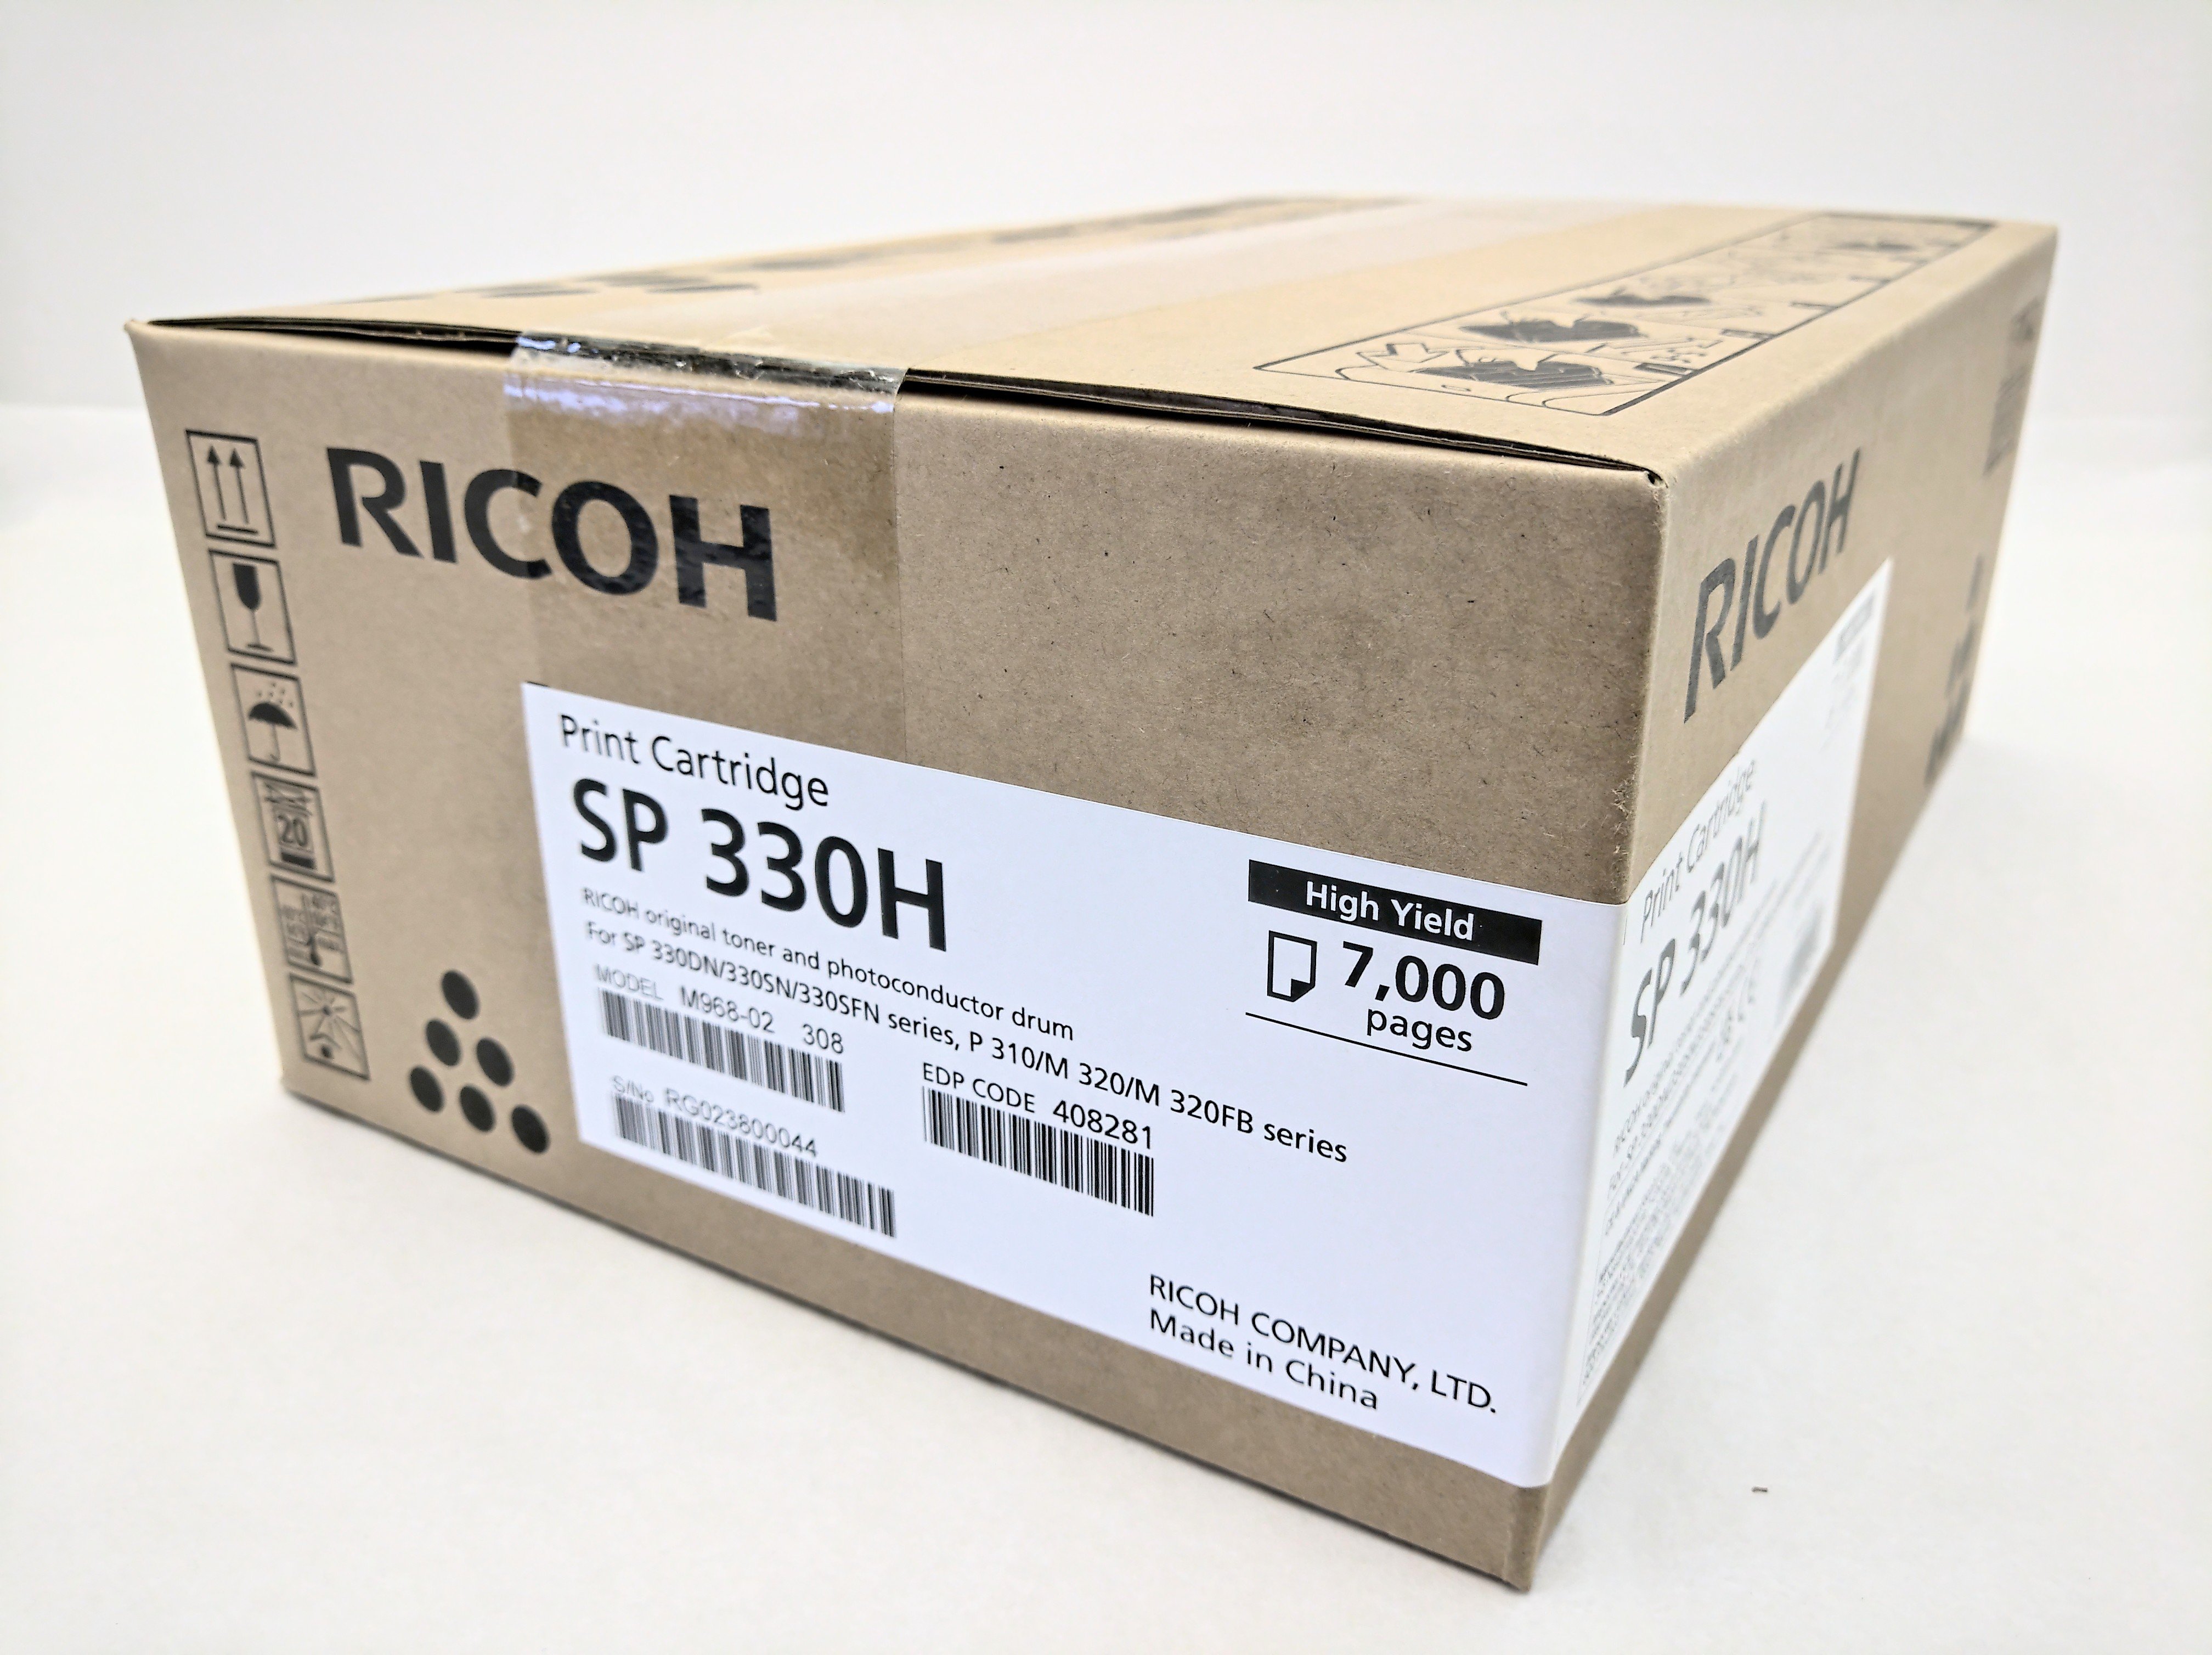 Ricoh SP 330H Print Cartr.